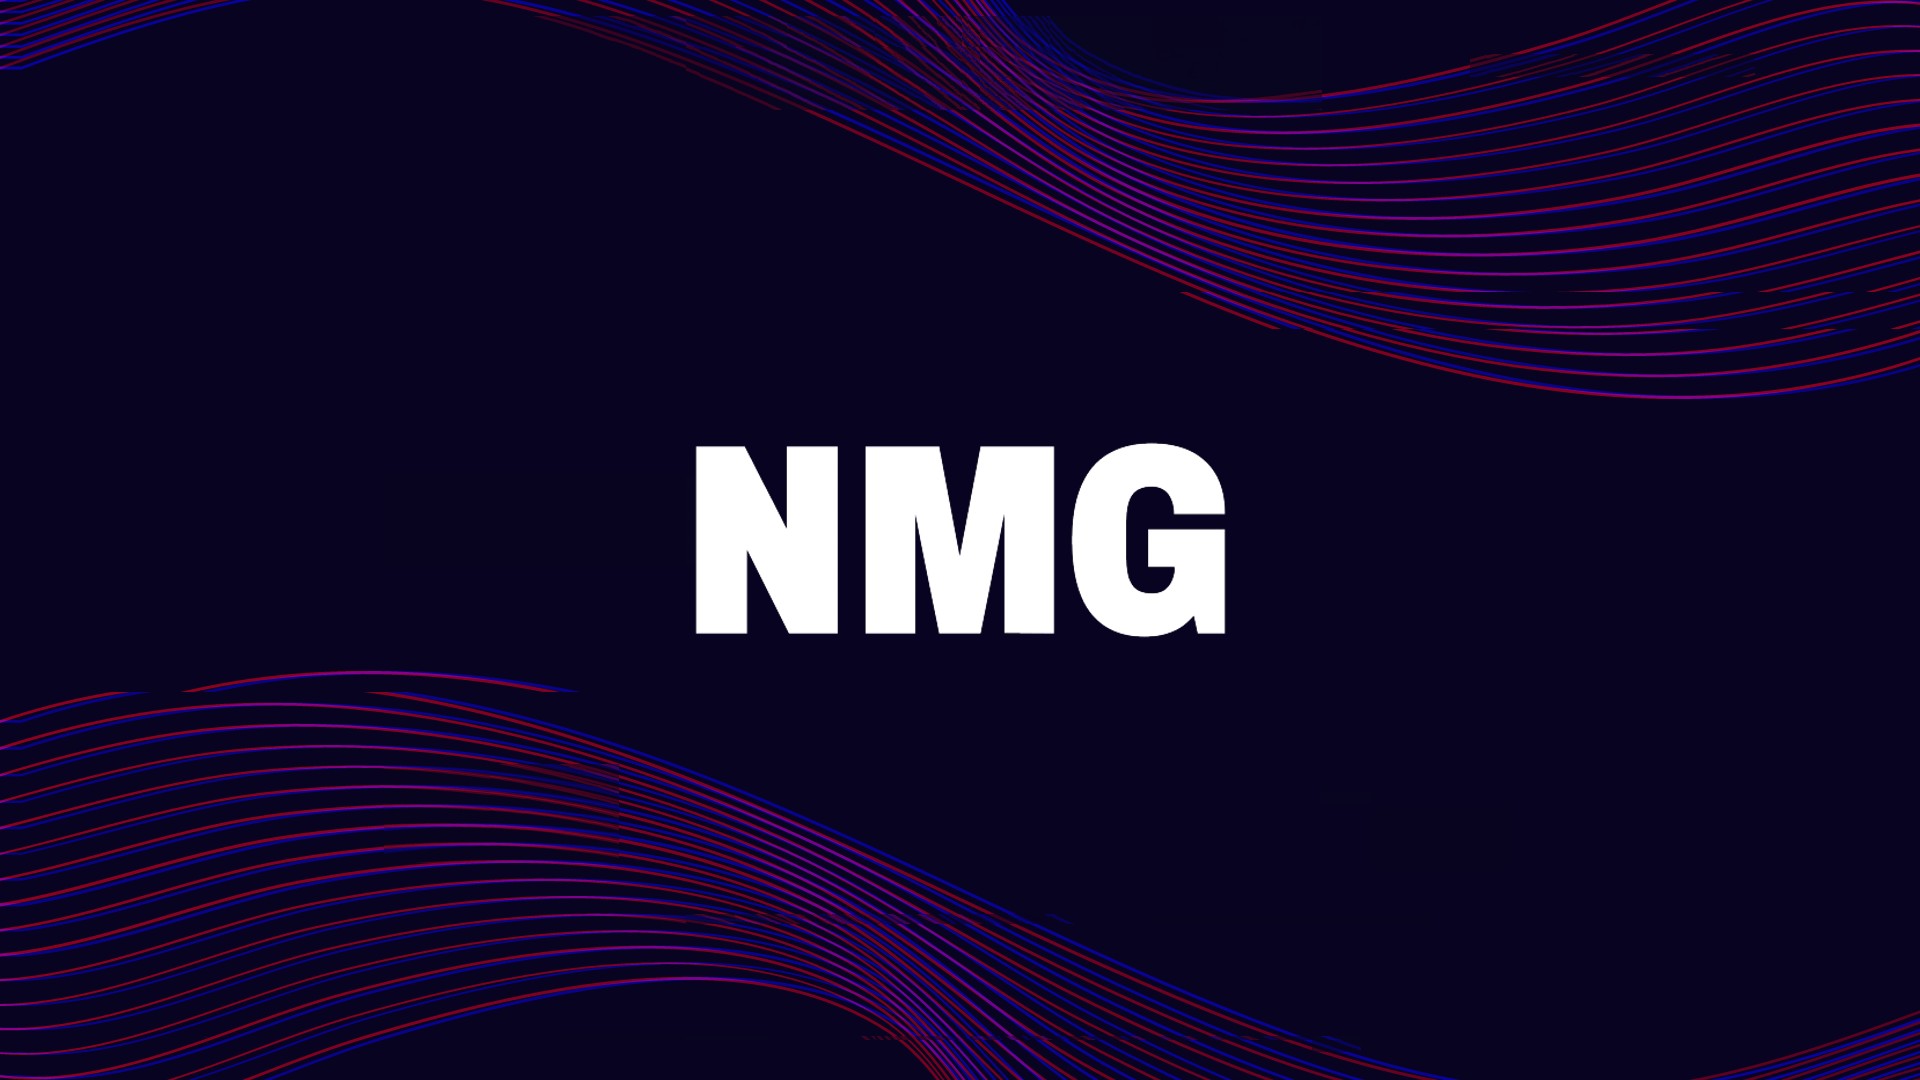 Narcity Media Group on purple & black background